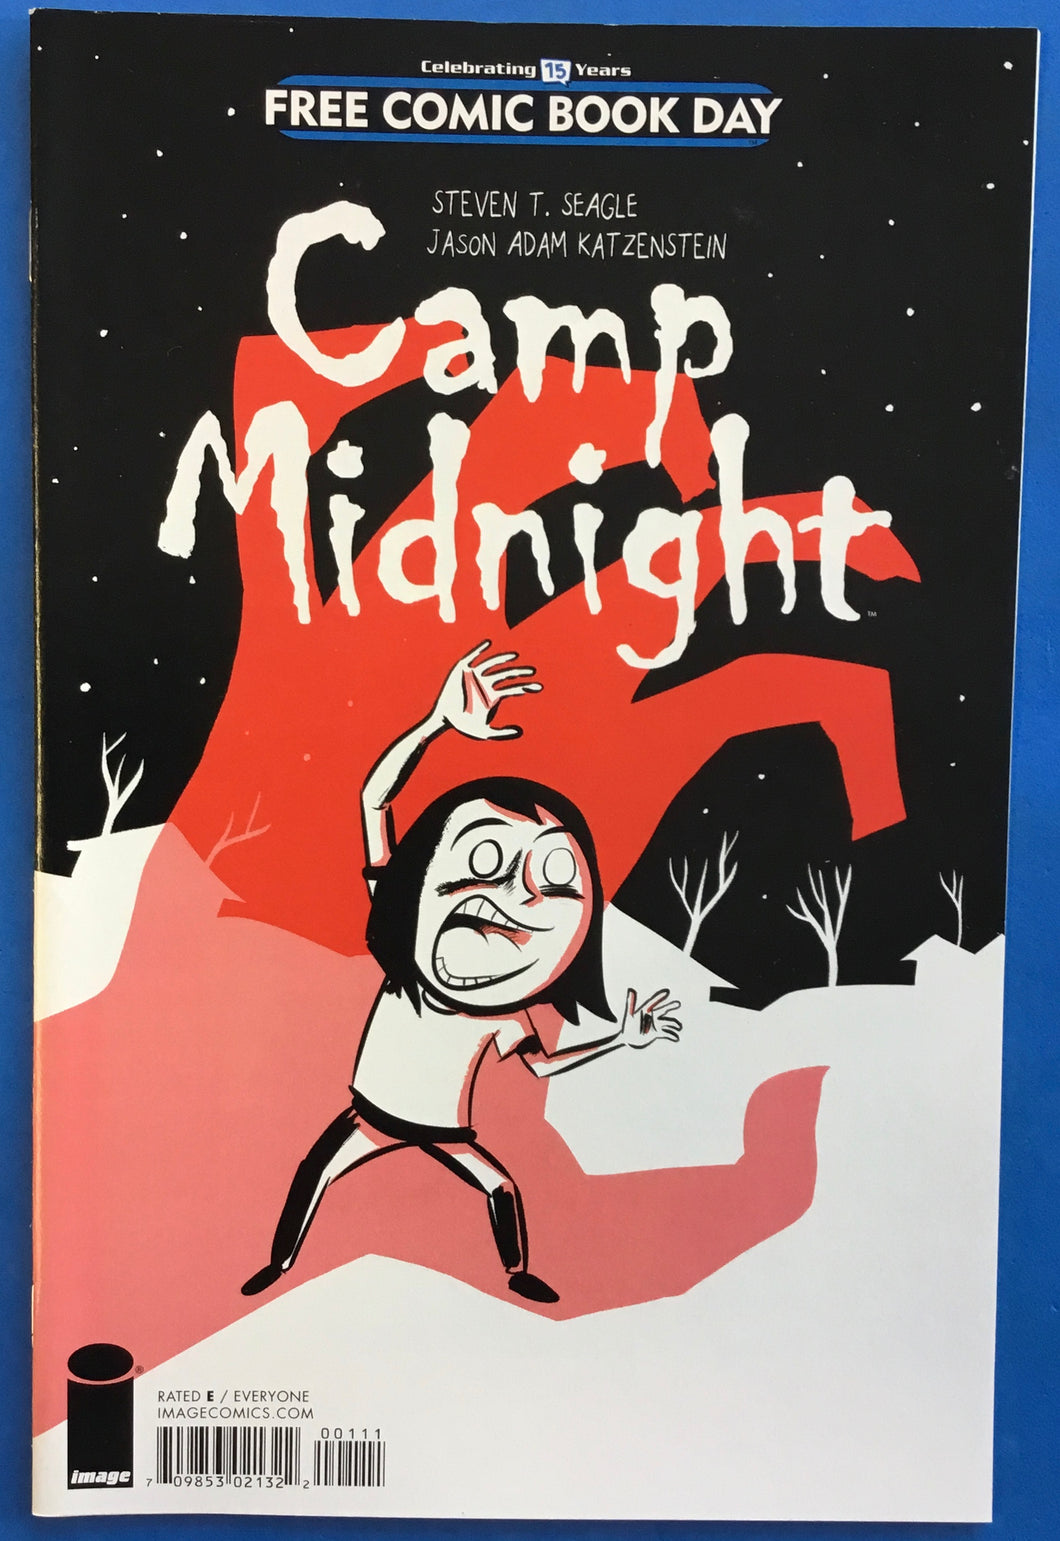 Camp Midnight FCBD 2016 Image Comics